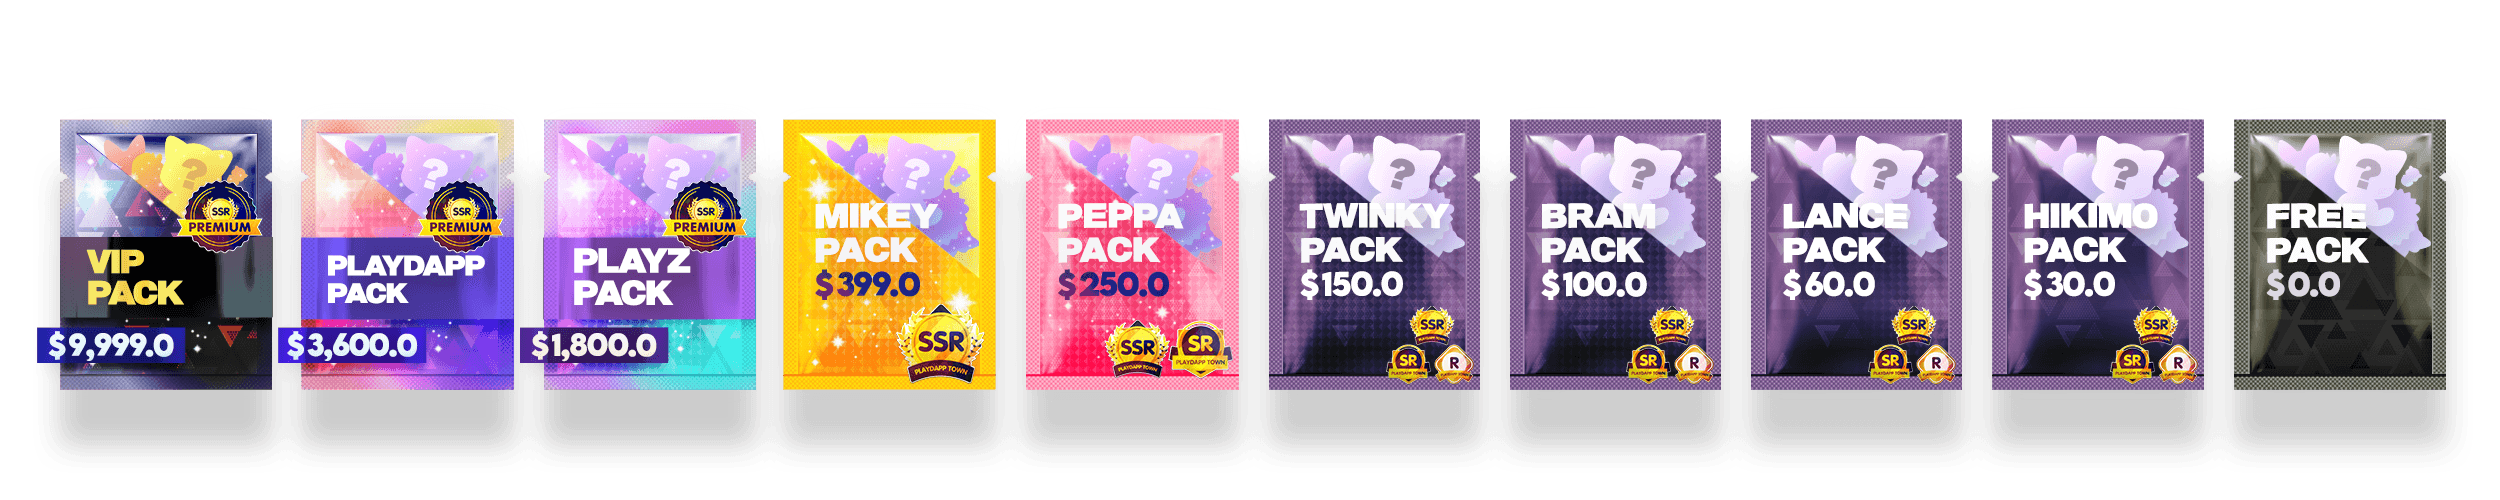 playdapp pack